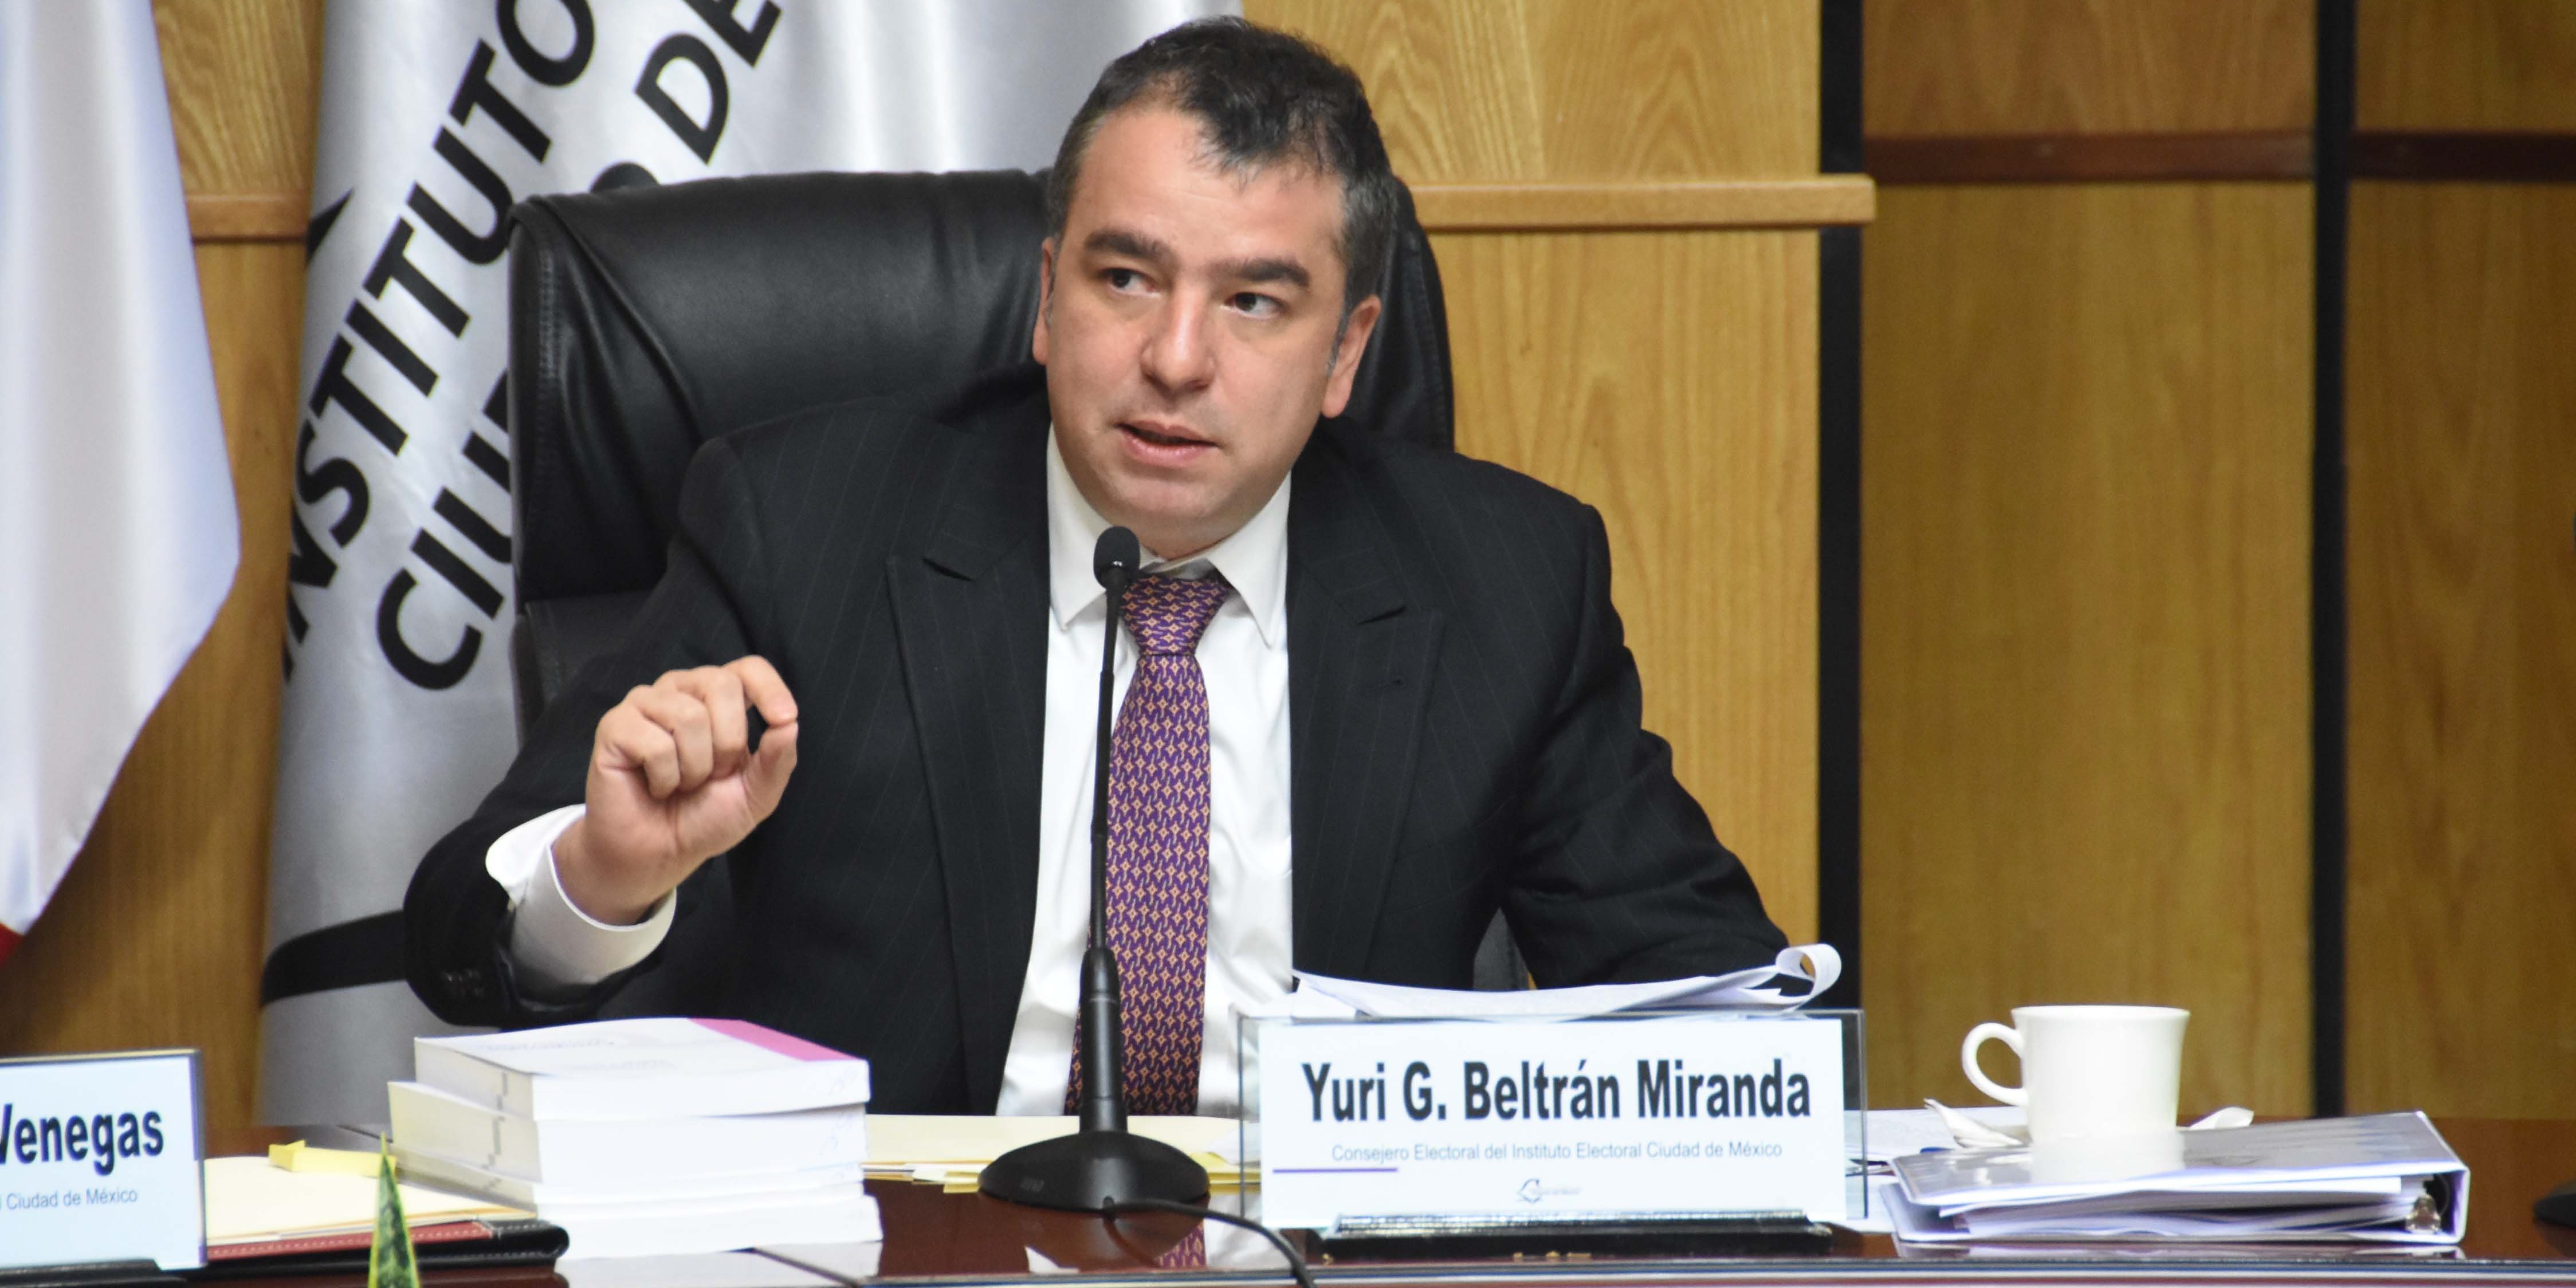 Indispensable buscar canales adecuados para incentivar participación política juvenil: Consejero Electoral Yuri Beltrán